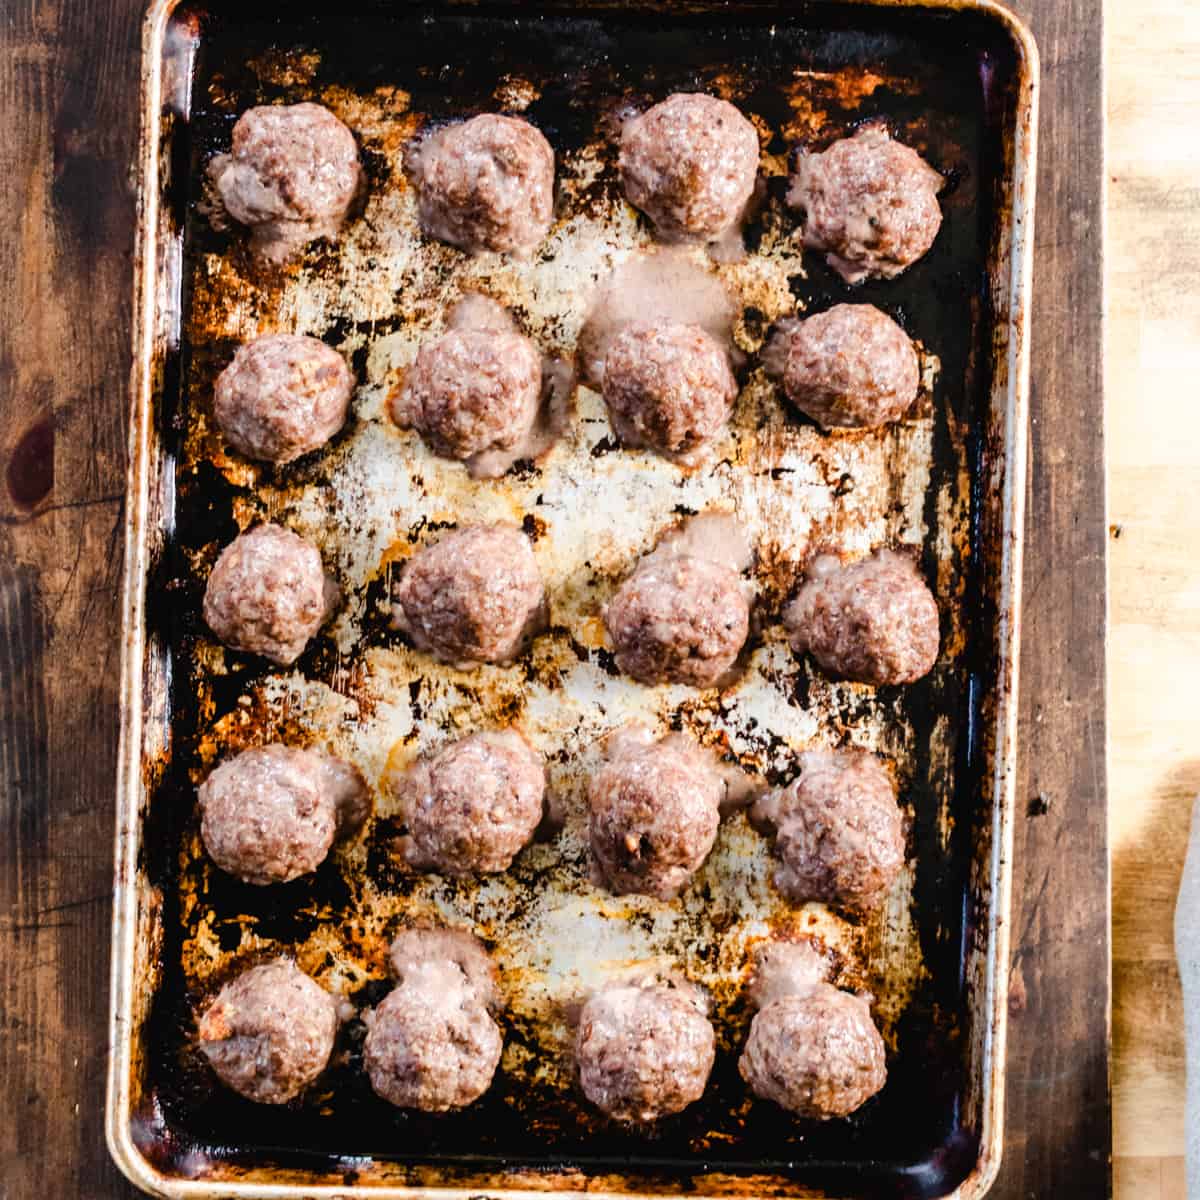 Meatballs on a baking sheet.